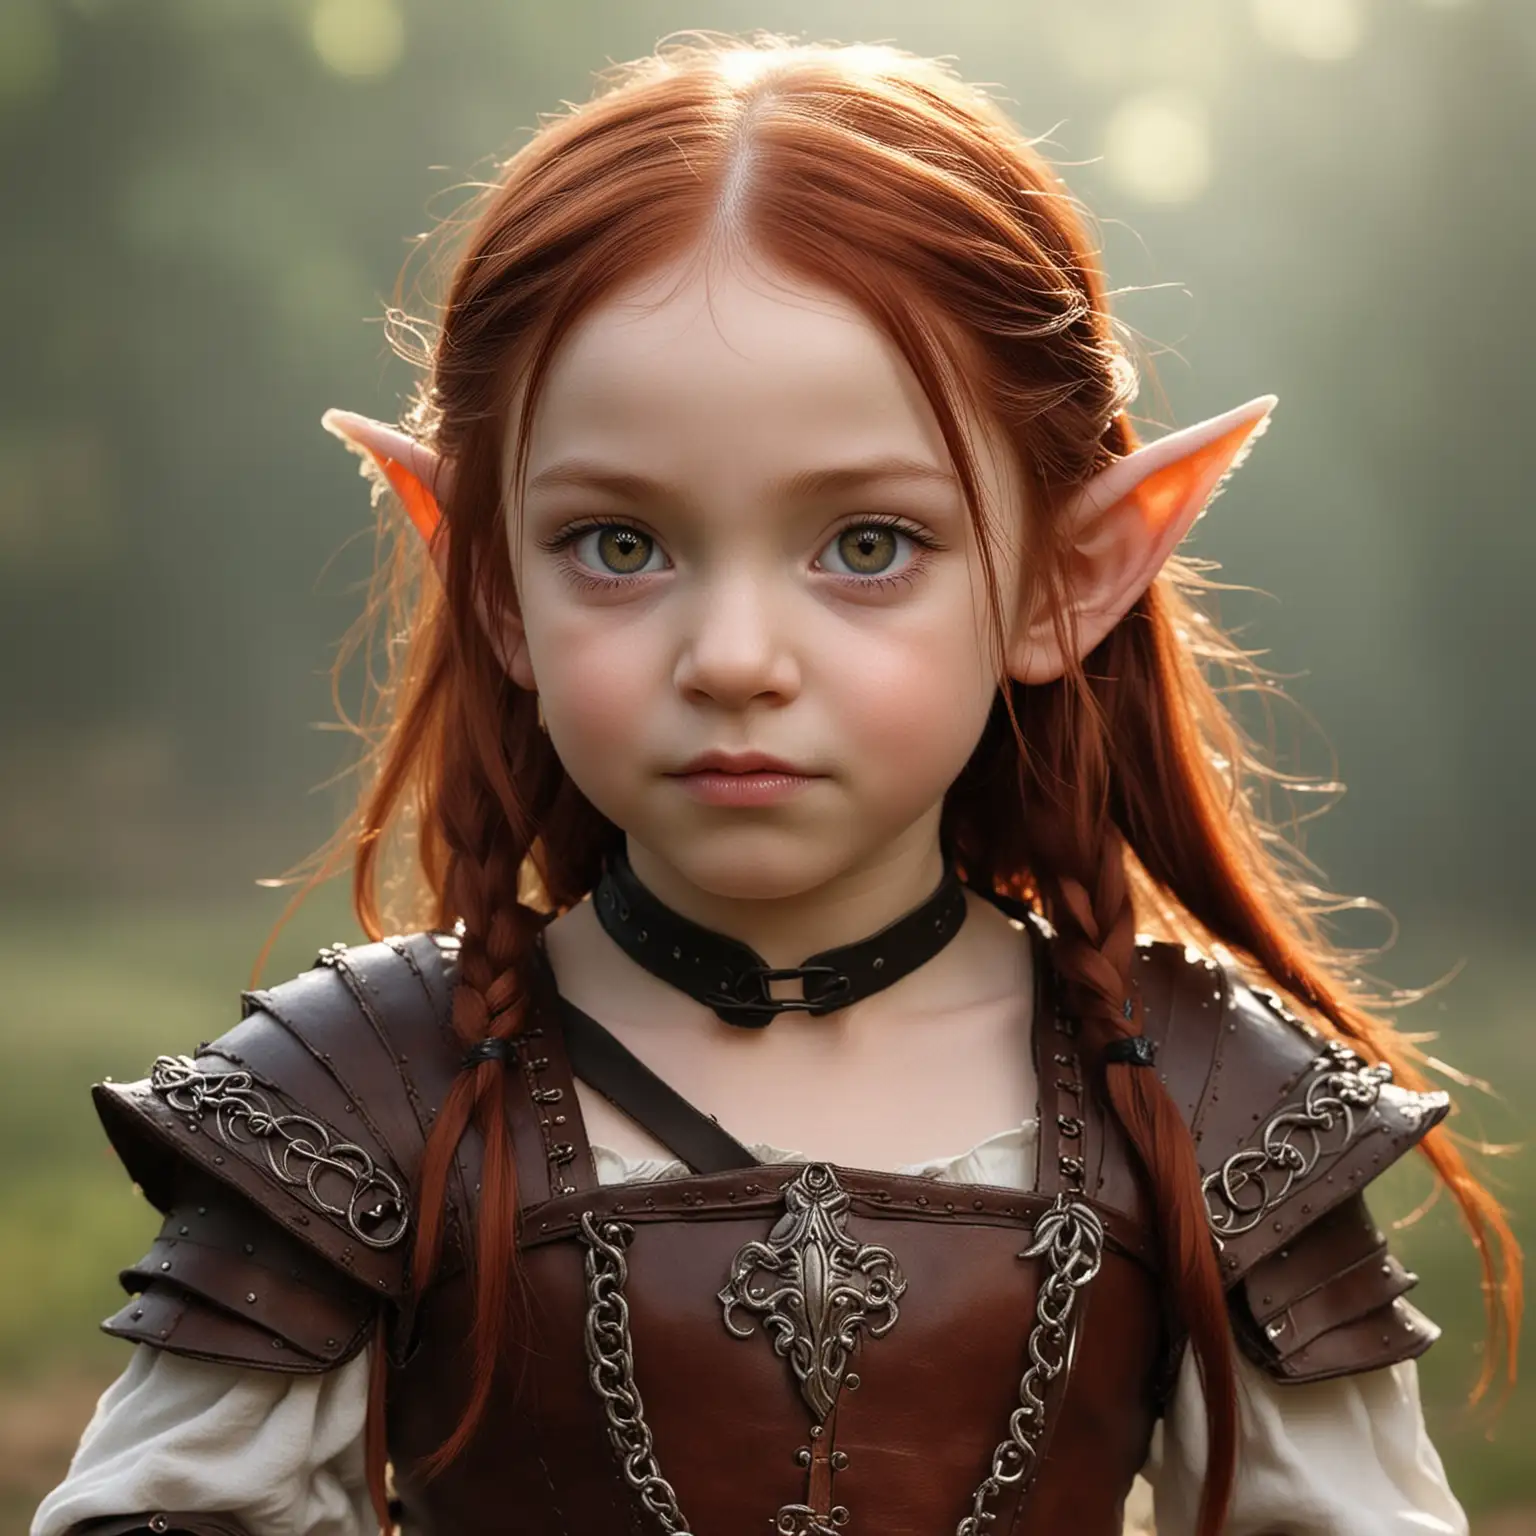 Adorable Elven Warrior Girl in RustColored Attire